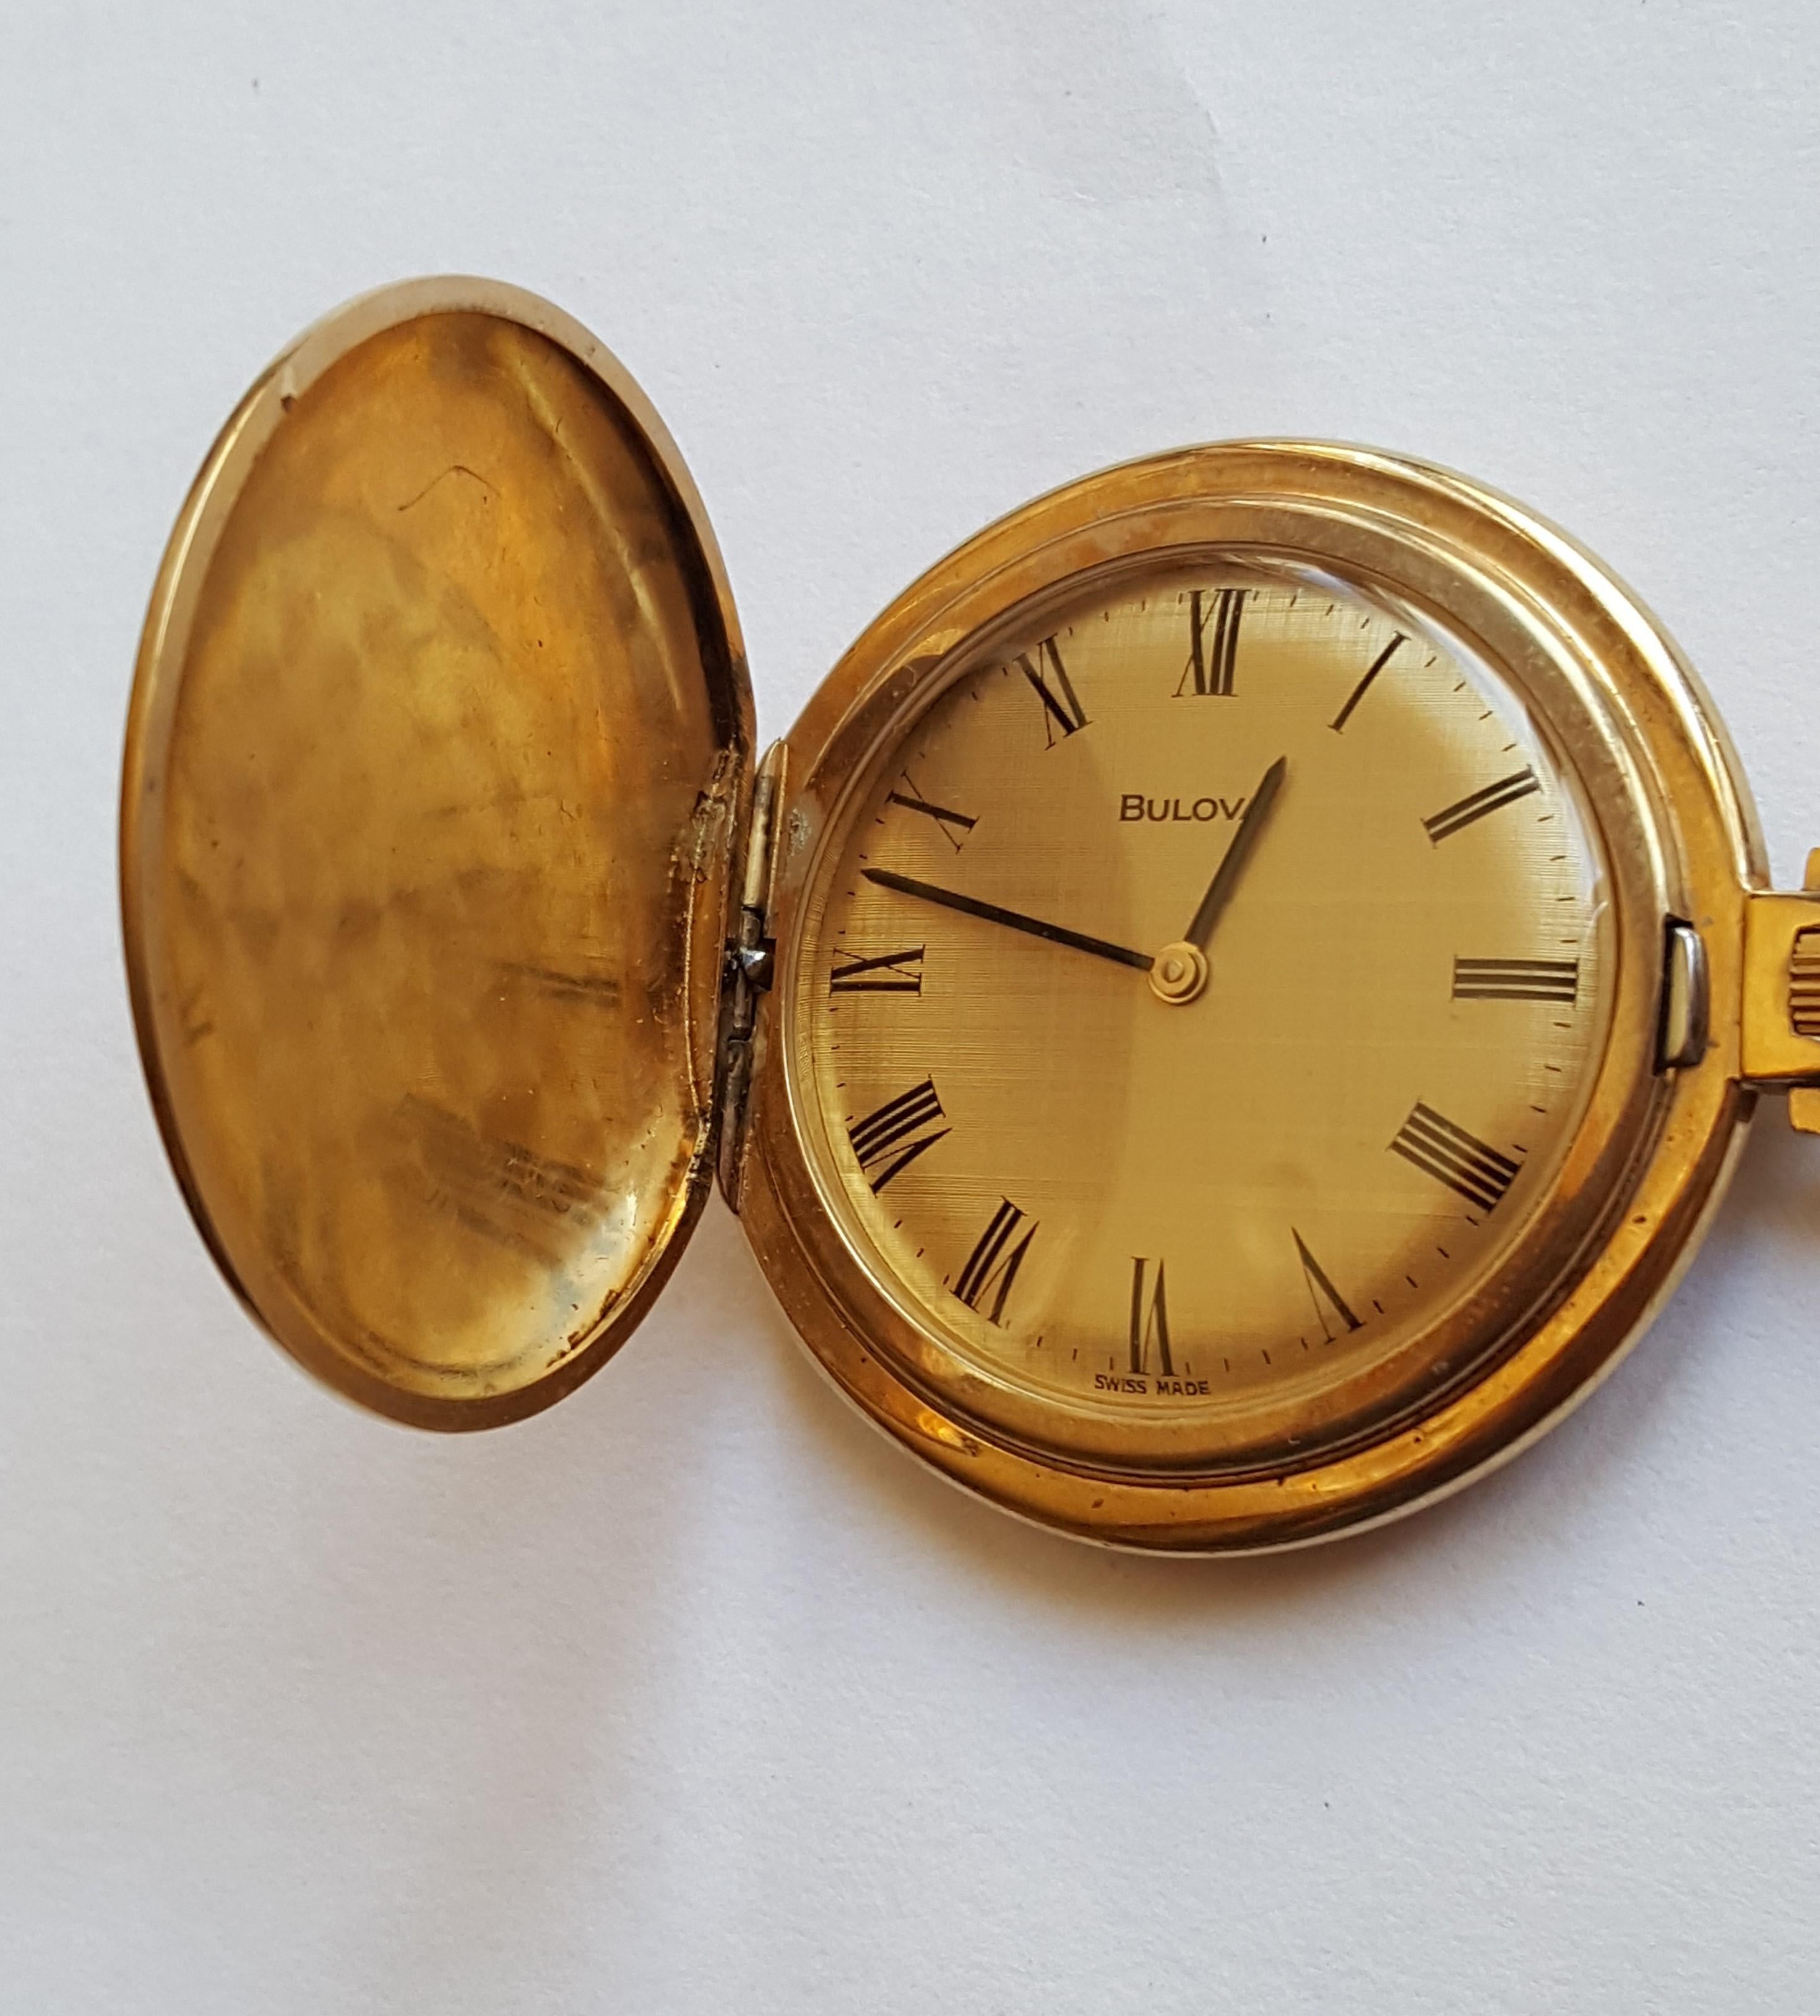 Modern Vintage Gold-Plated Bulova Pocket Watch, 1970s, 17 Jewel, Working, Swiss Made